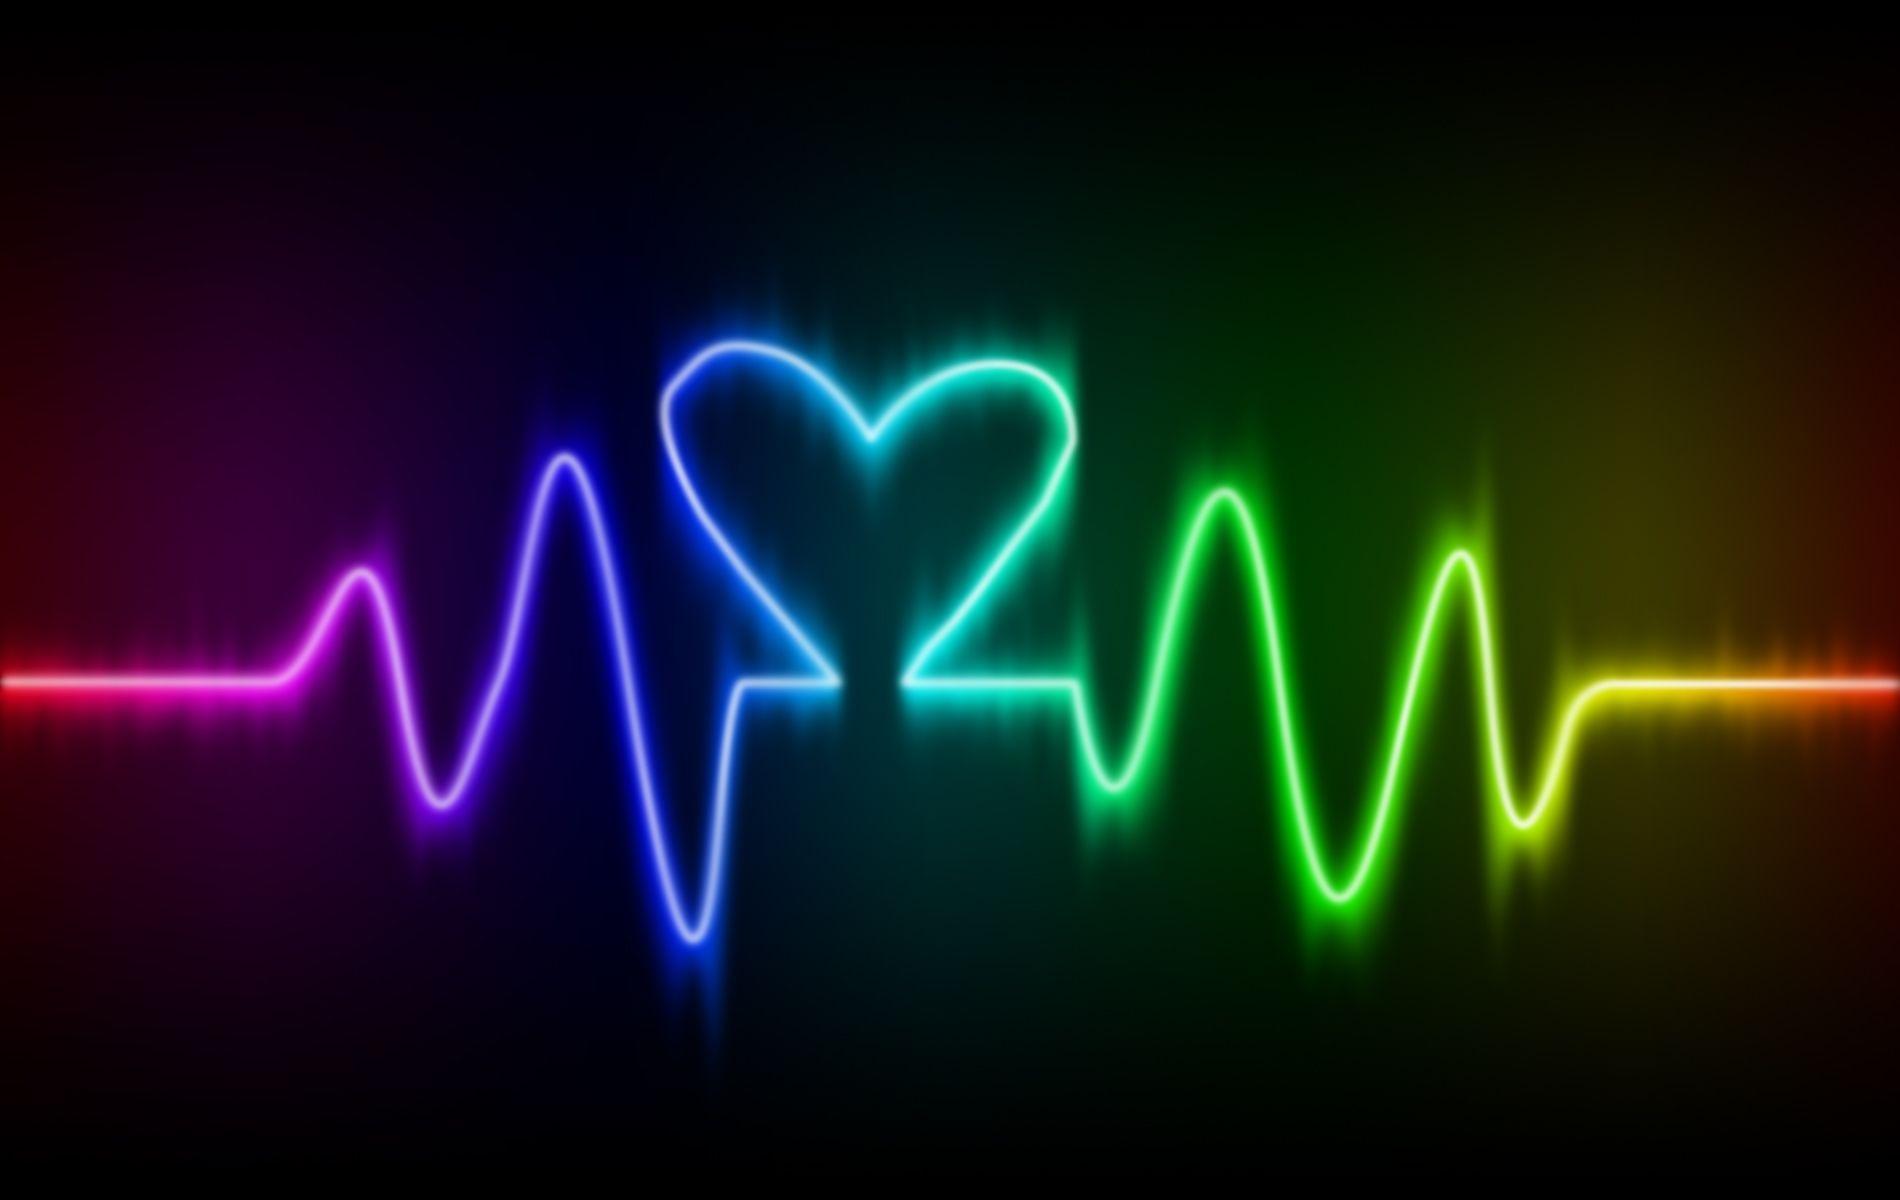 rainbow heartbeat♥. OoOoOoOH Pretty. Heartbeat line, Romantic